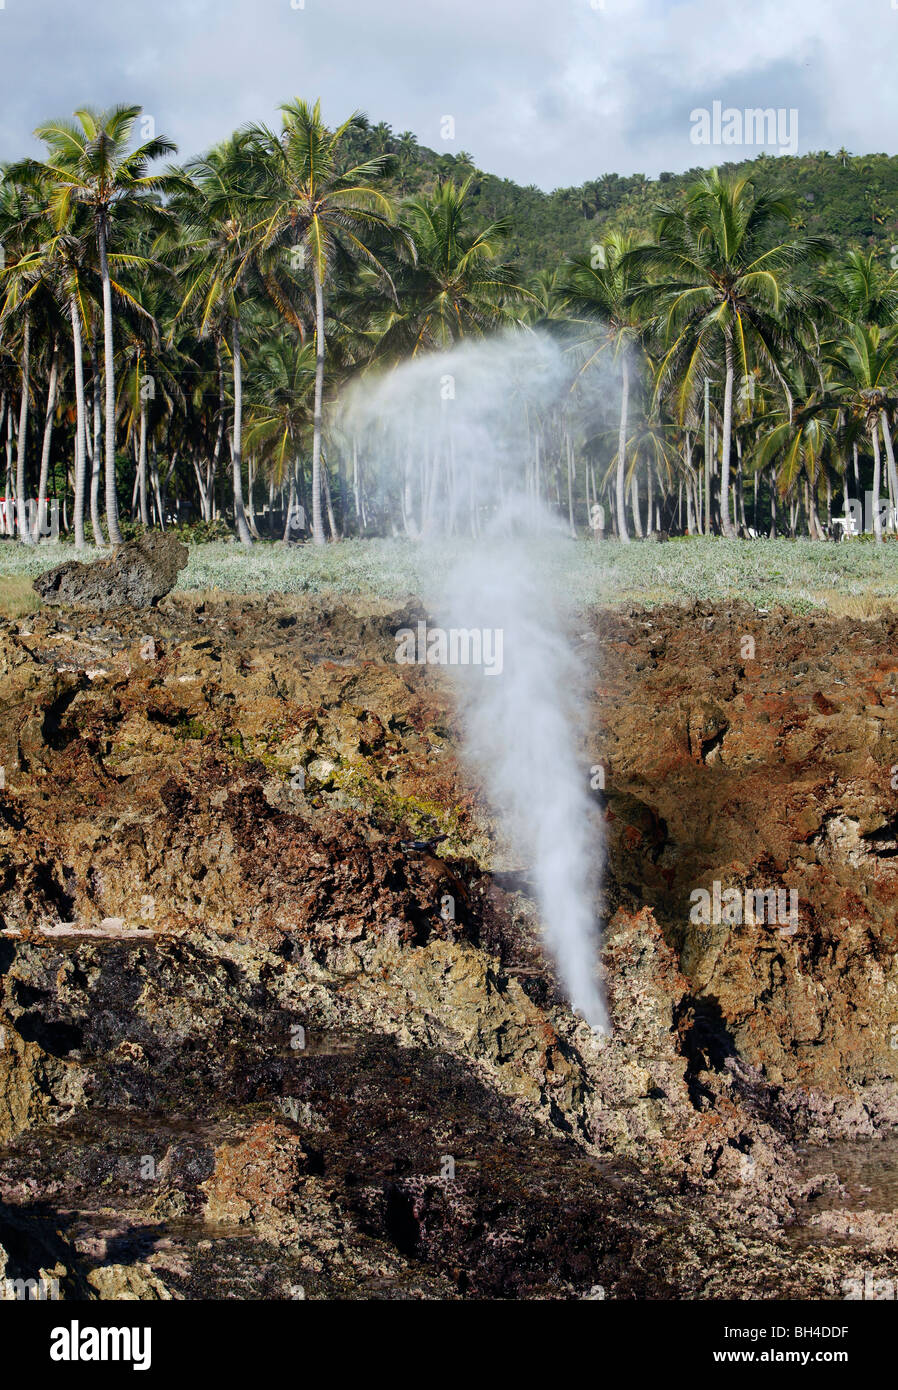 A blow hole on the coast, Samana peninsula, Dominican Republic Stock Photo